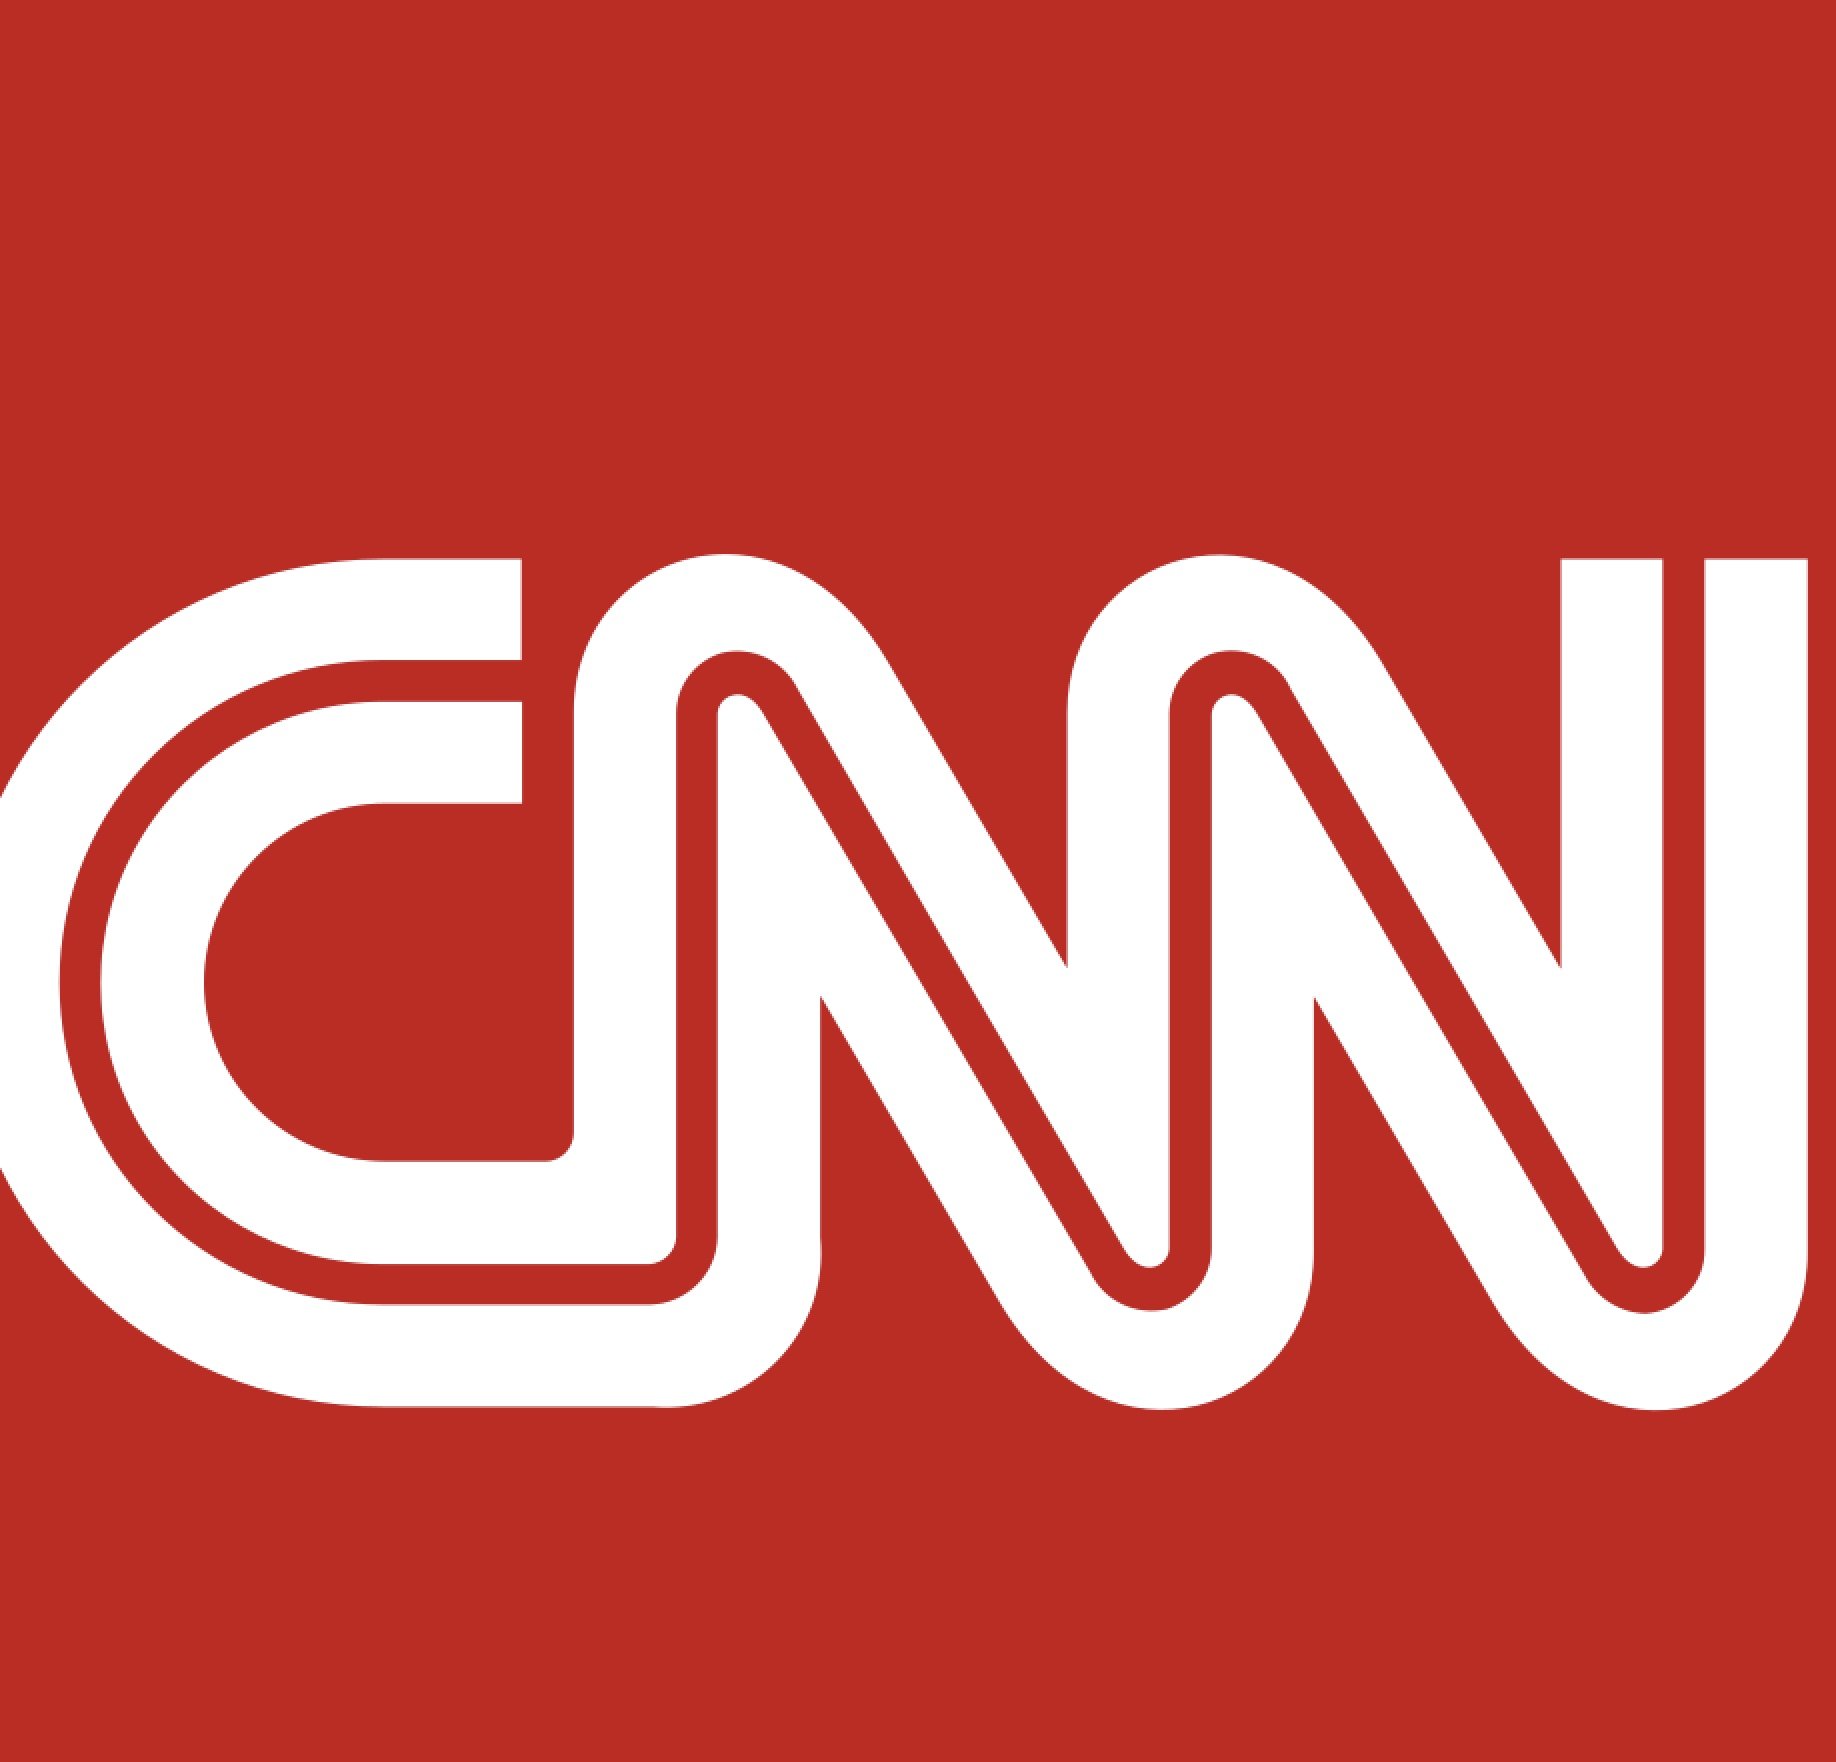 Cnn live. CNN. LW logo.